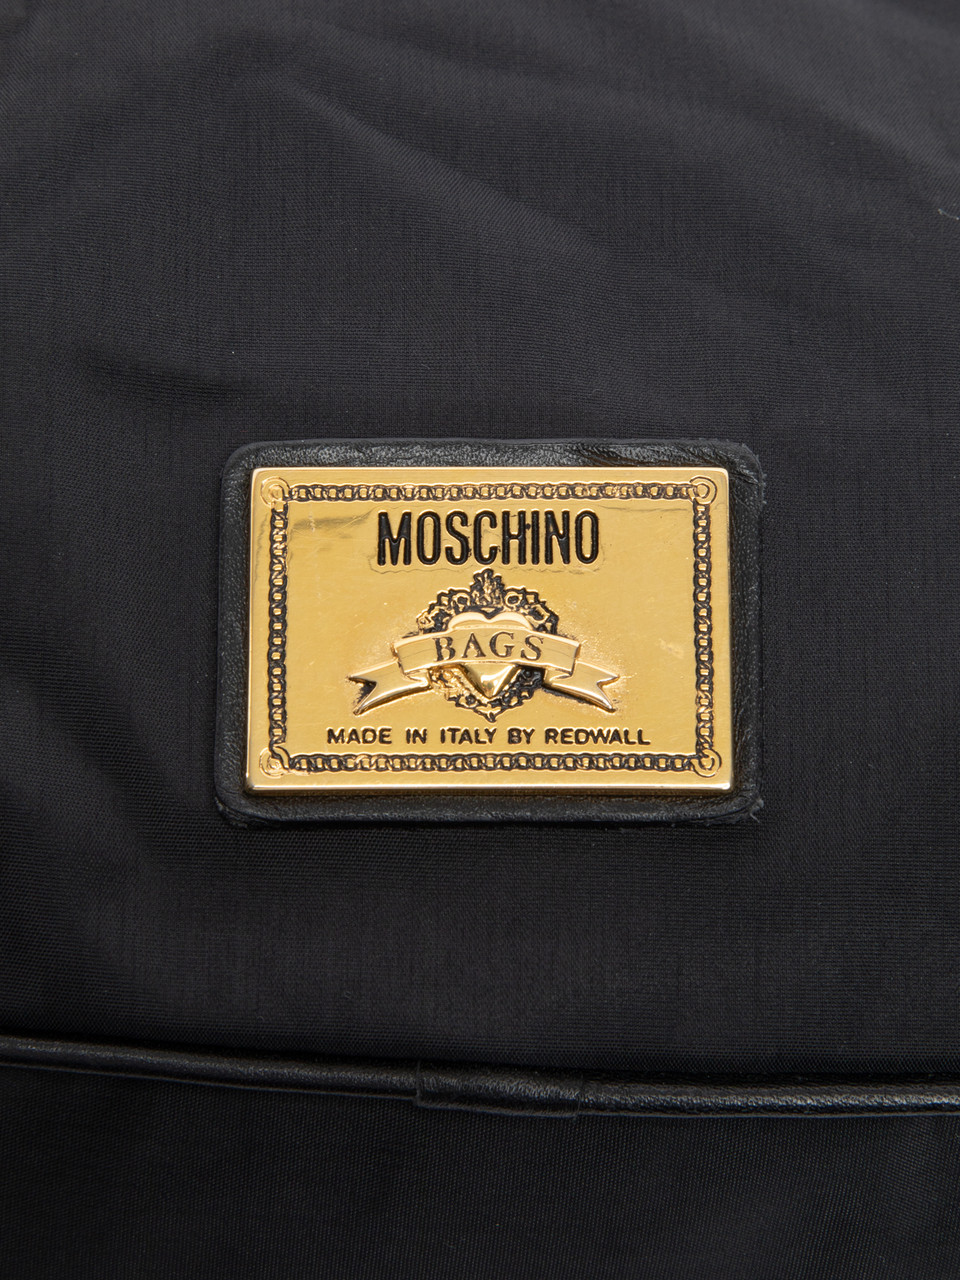 Moschino Black Backpack